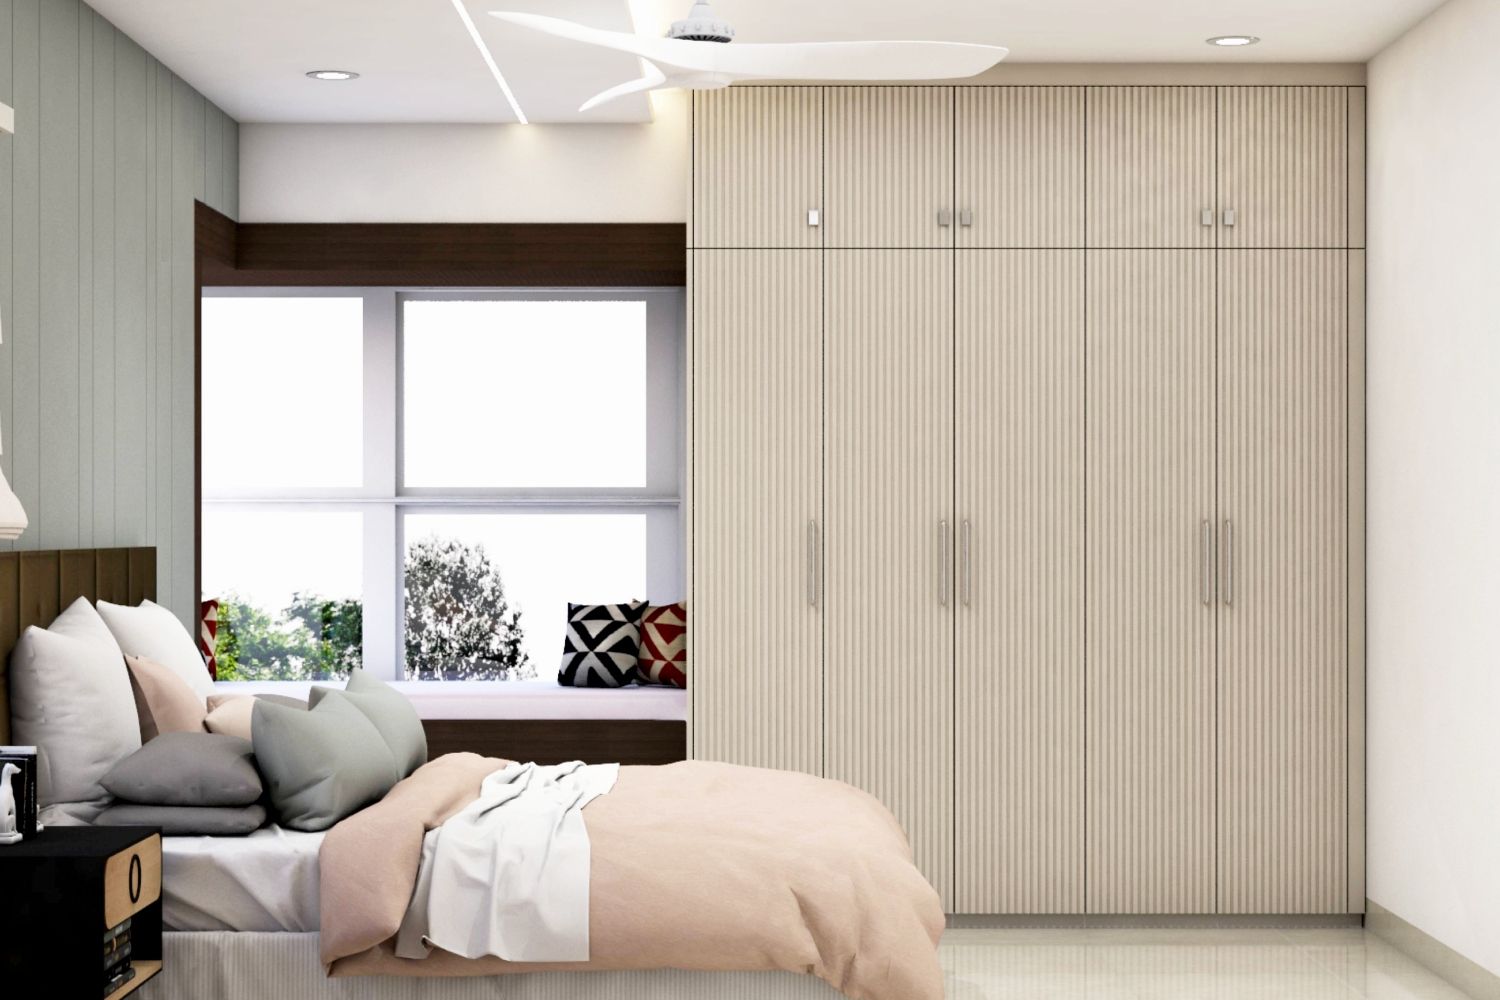 20 Bedroom Almirah Design Ideas for Your Apartment